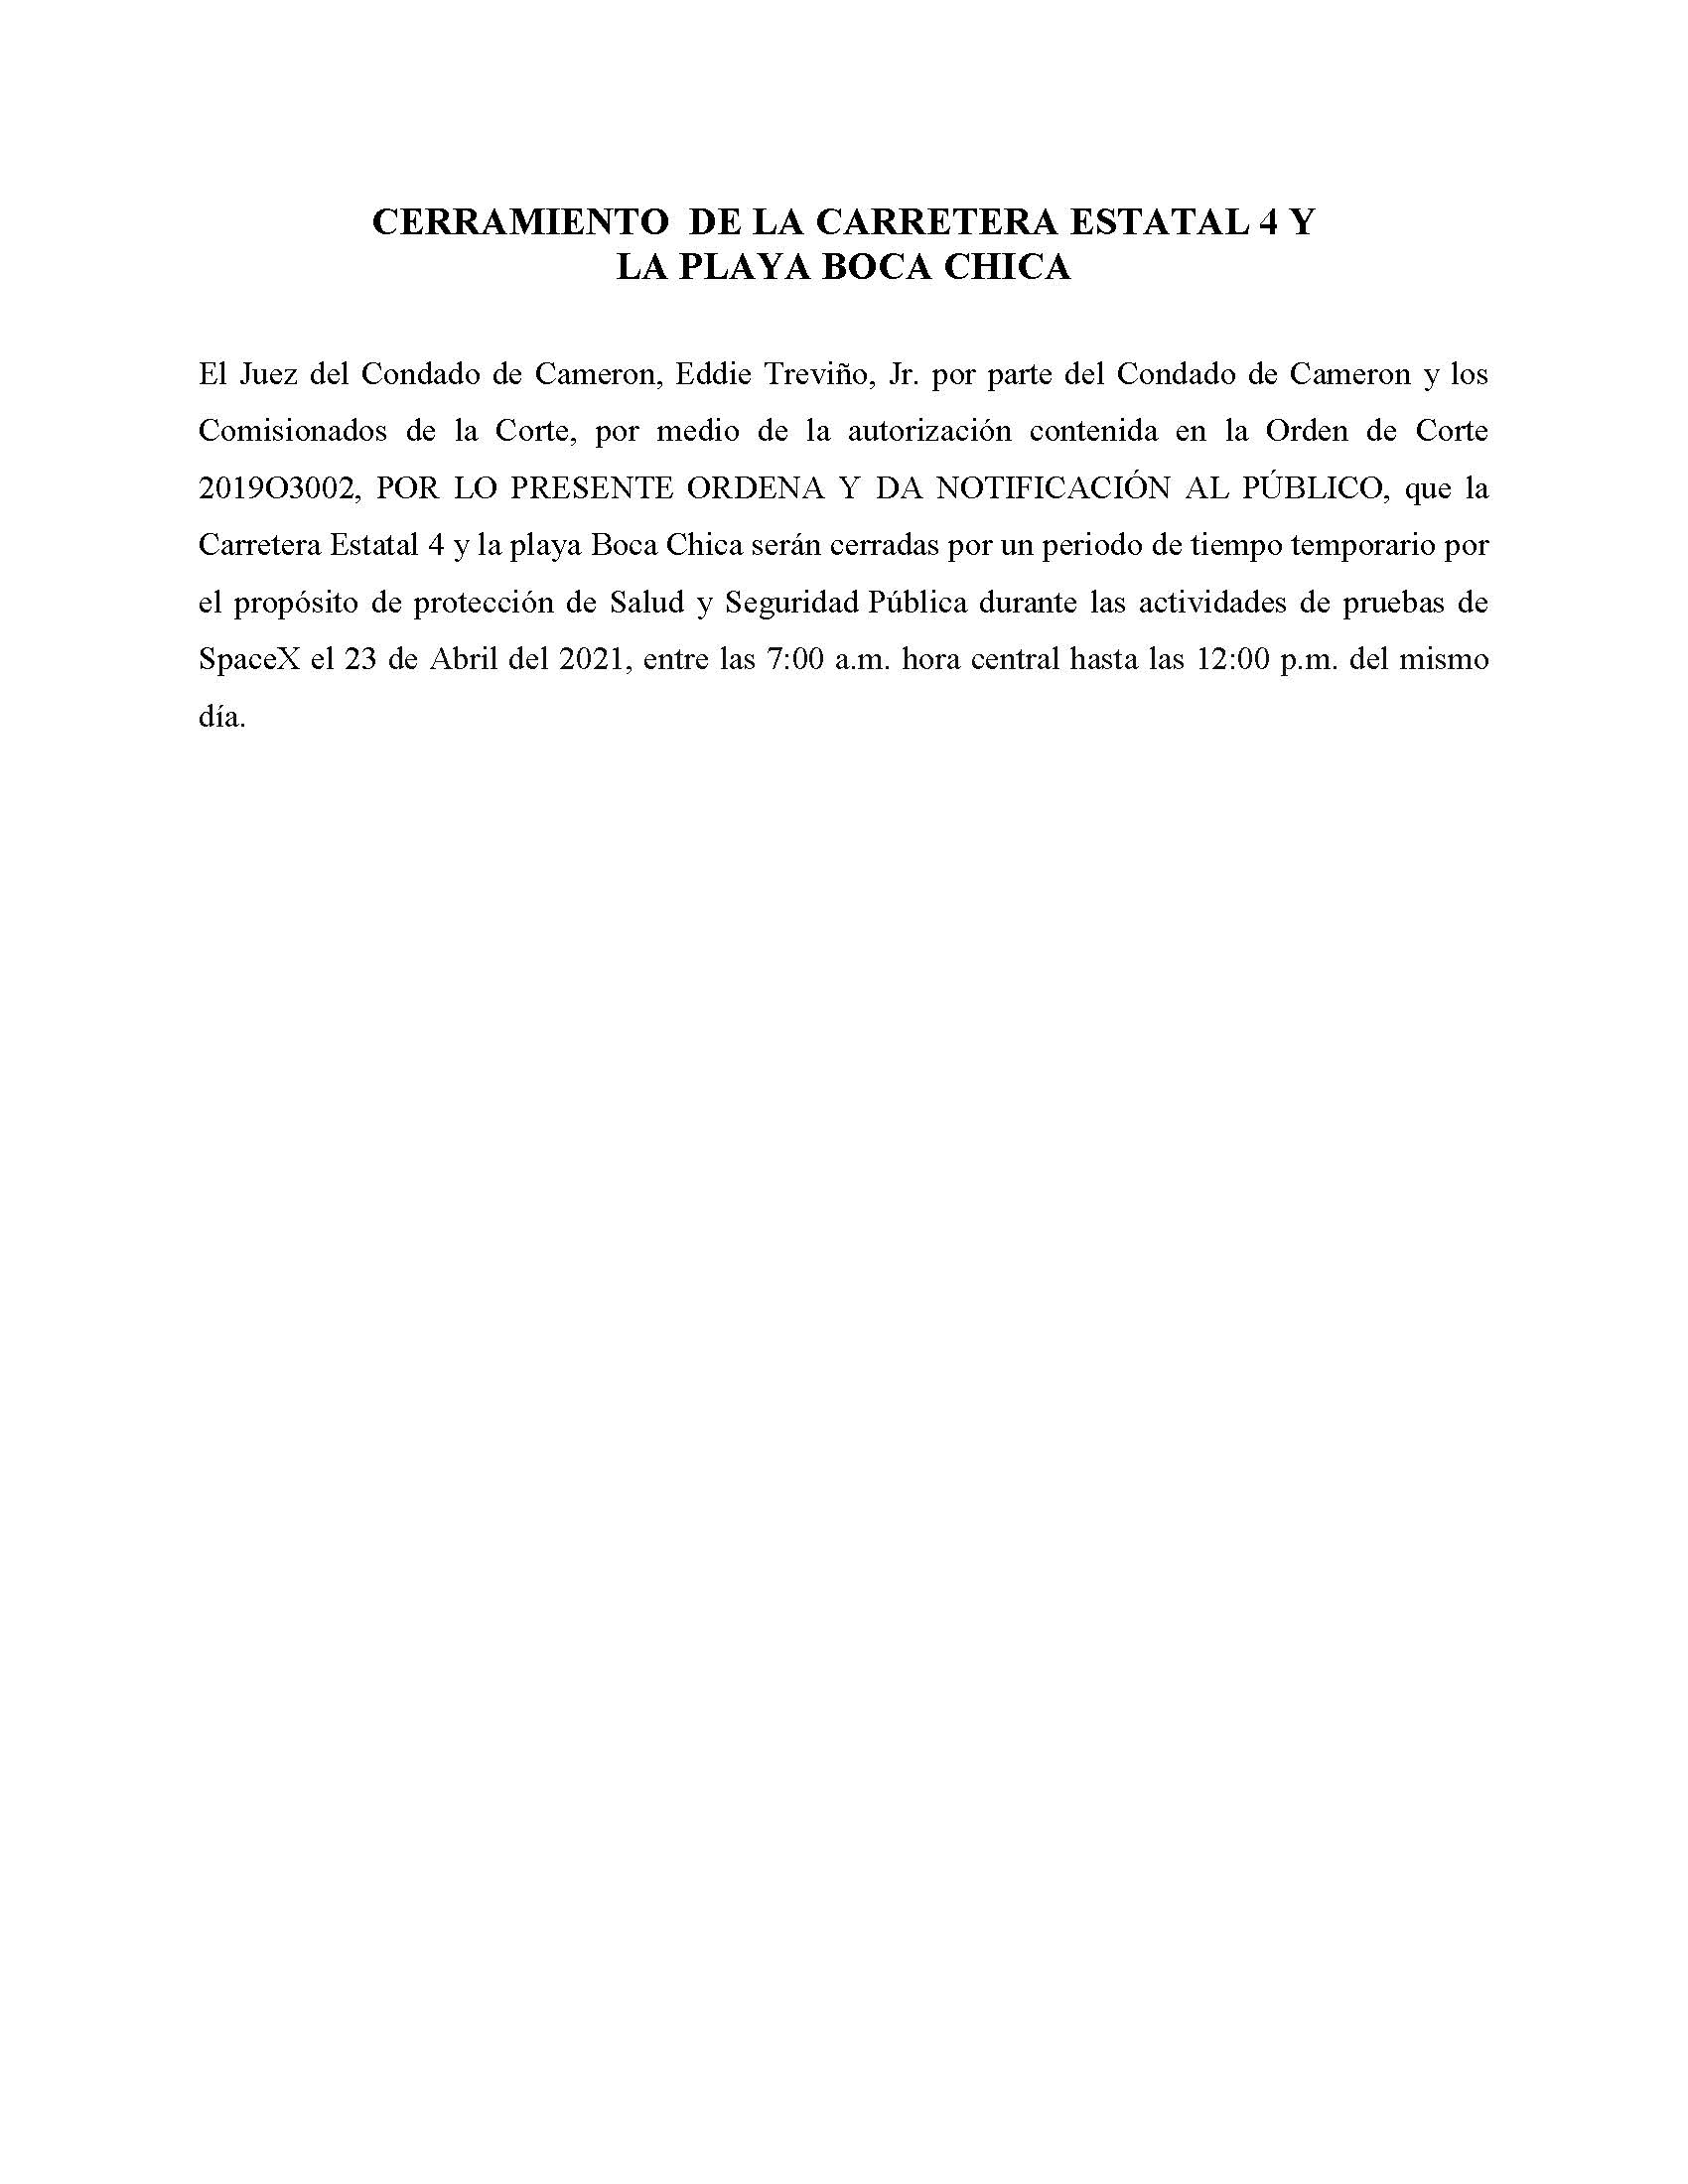 ORDER.CLOSURE OF HIGHWAY 4 Y LA PLAYA BOCA CHICA.SPANISH.04.23.2021 002